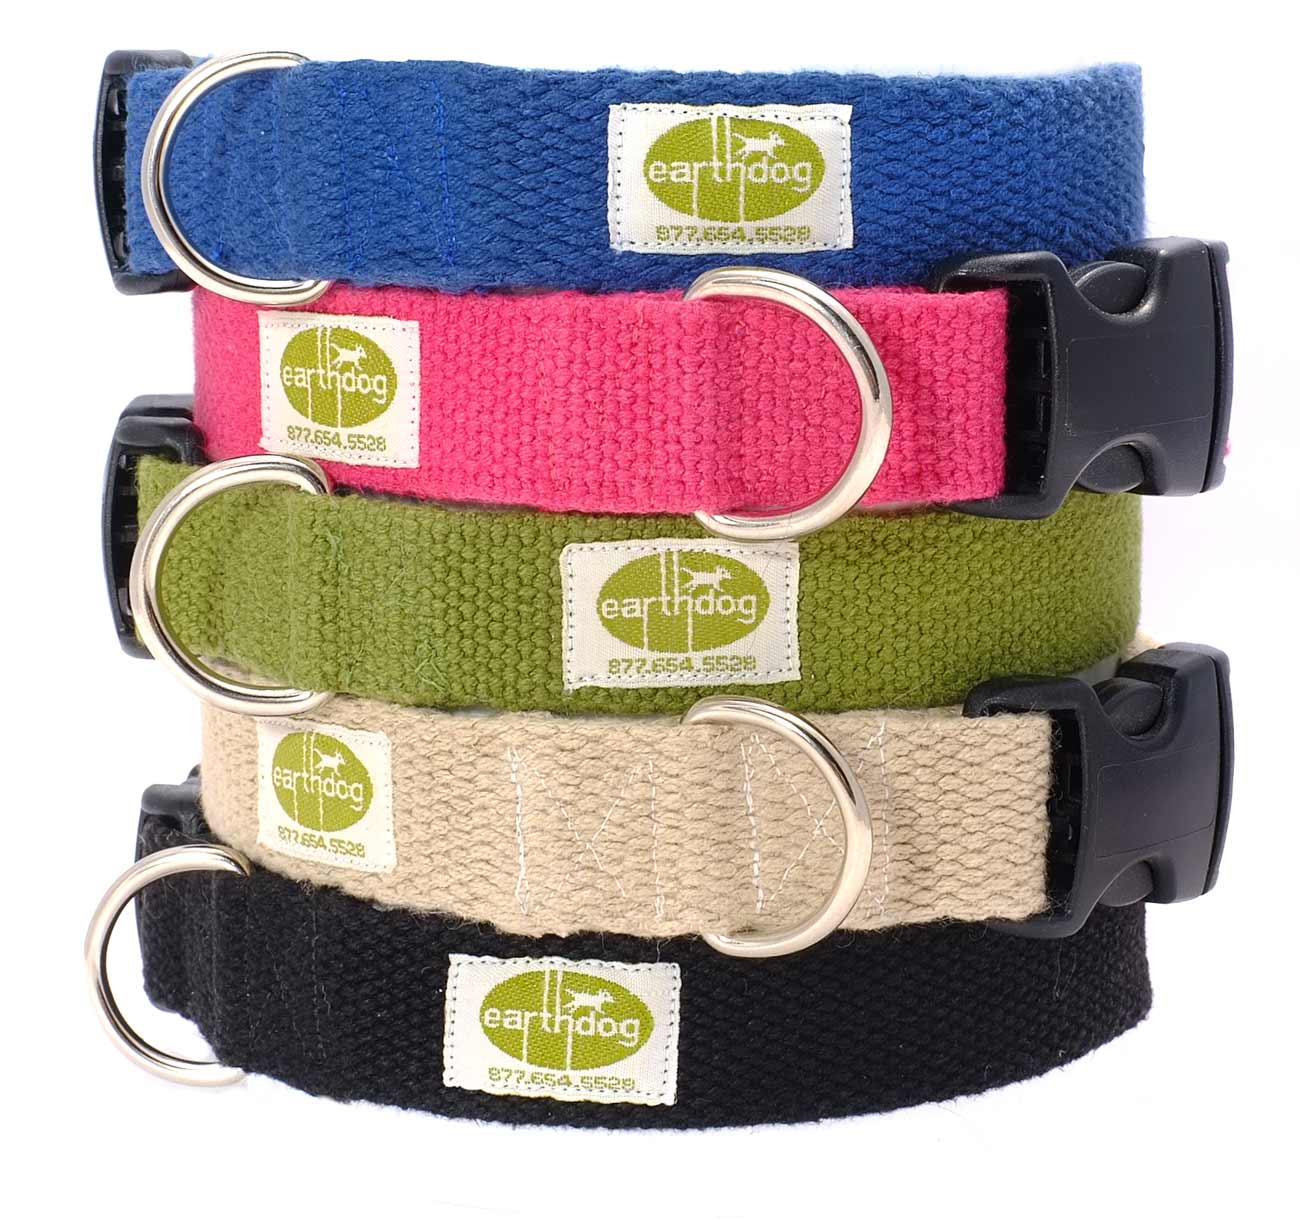 earthdog natural hypoallergenic adjustable hemp dog collars in 6 colors